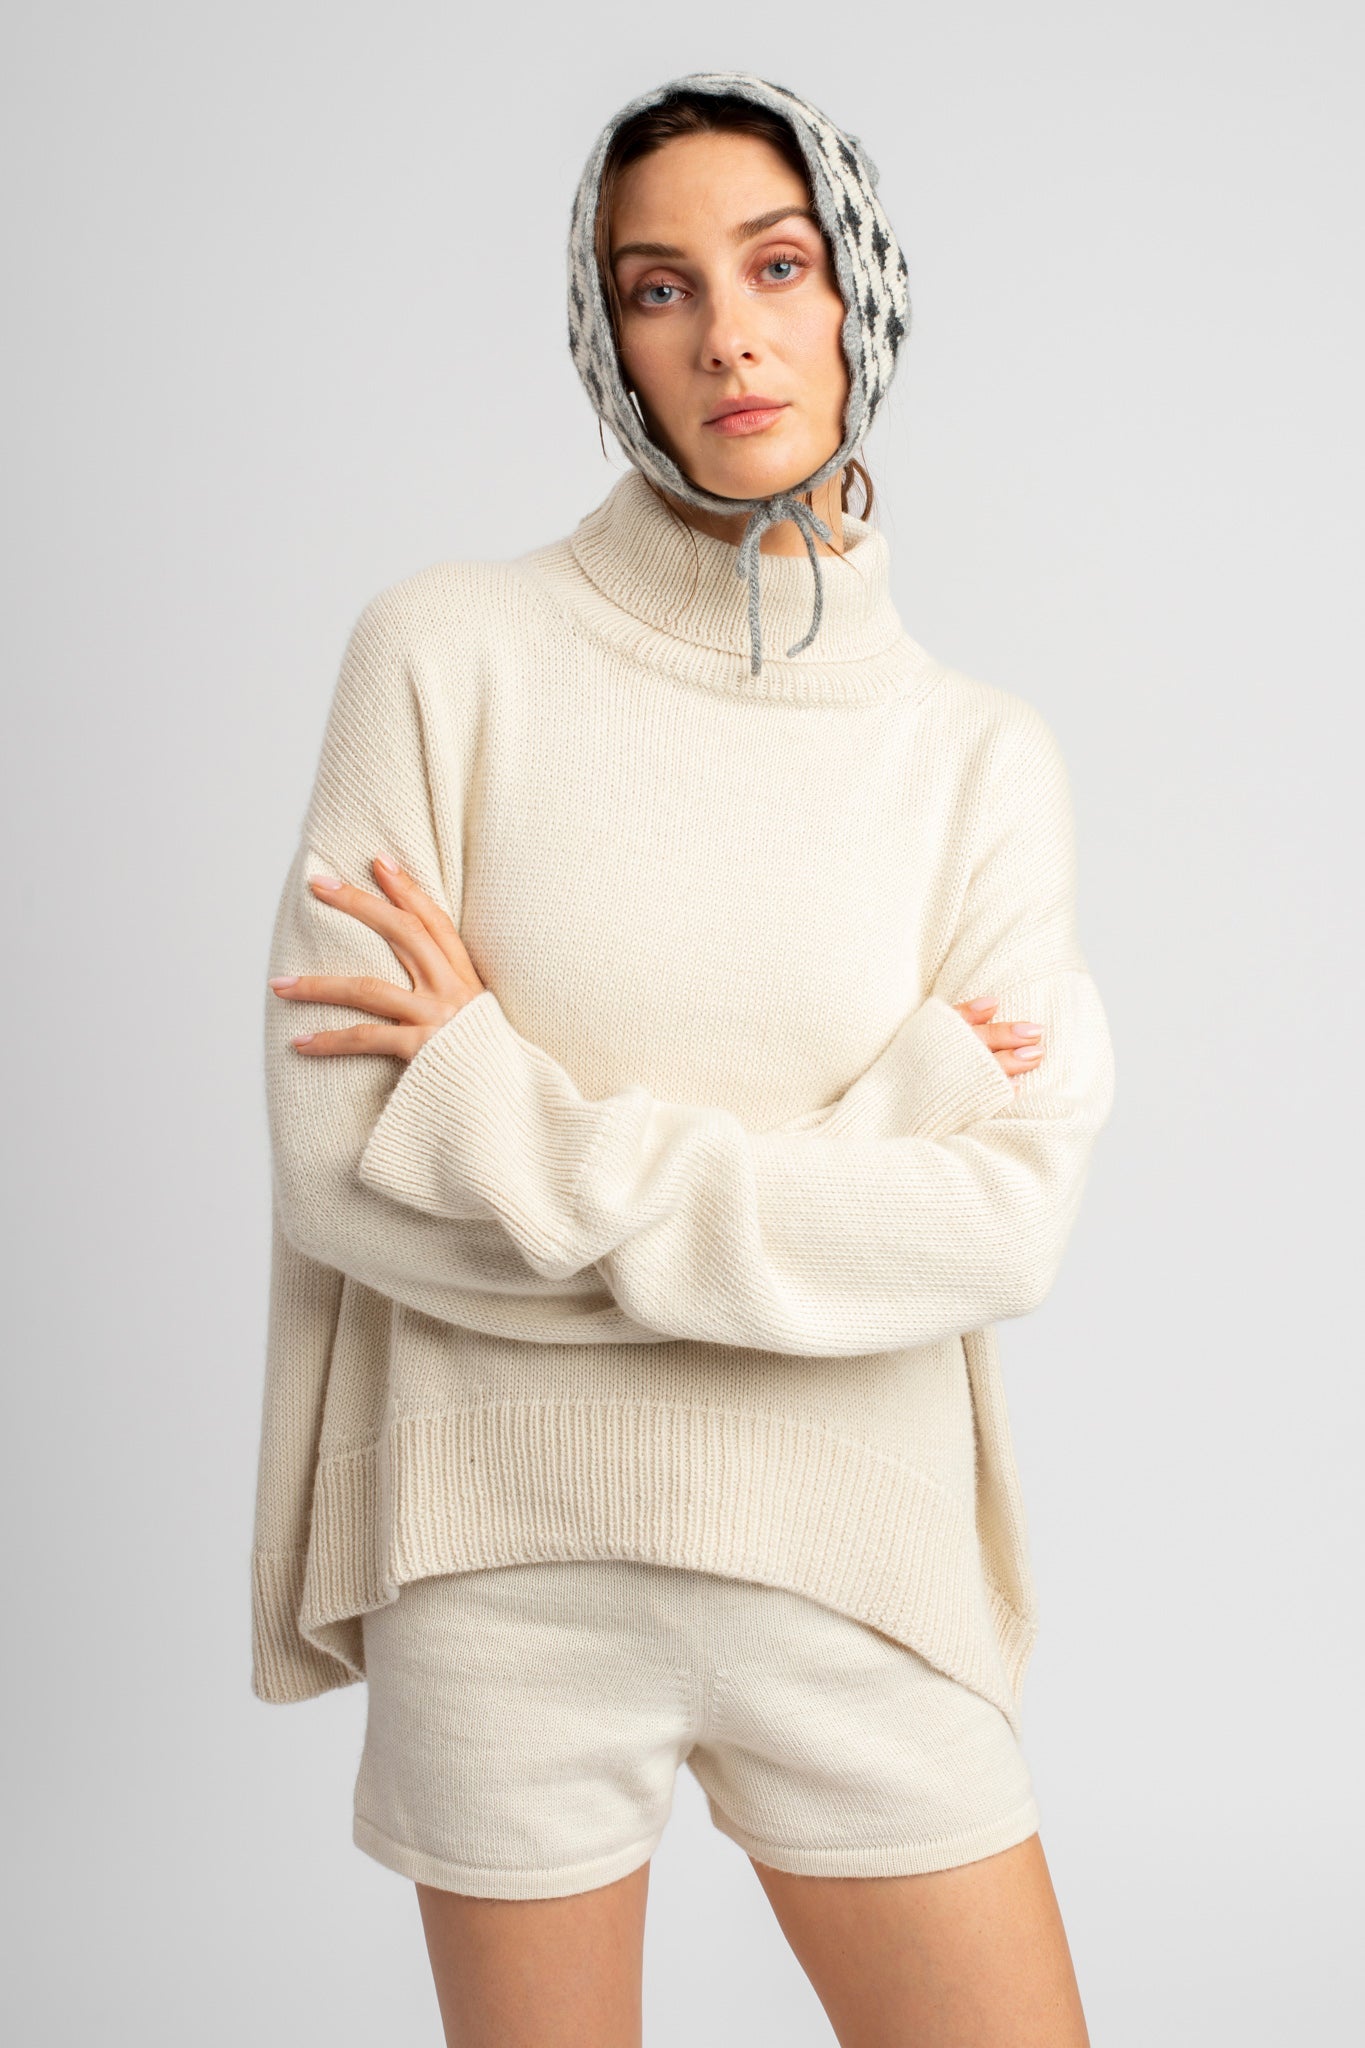 Model wearing turtleneck oversized sweater in white alpaca wool, arms crossed